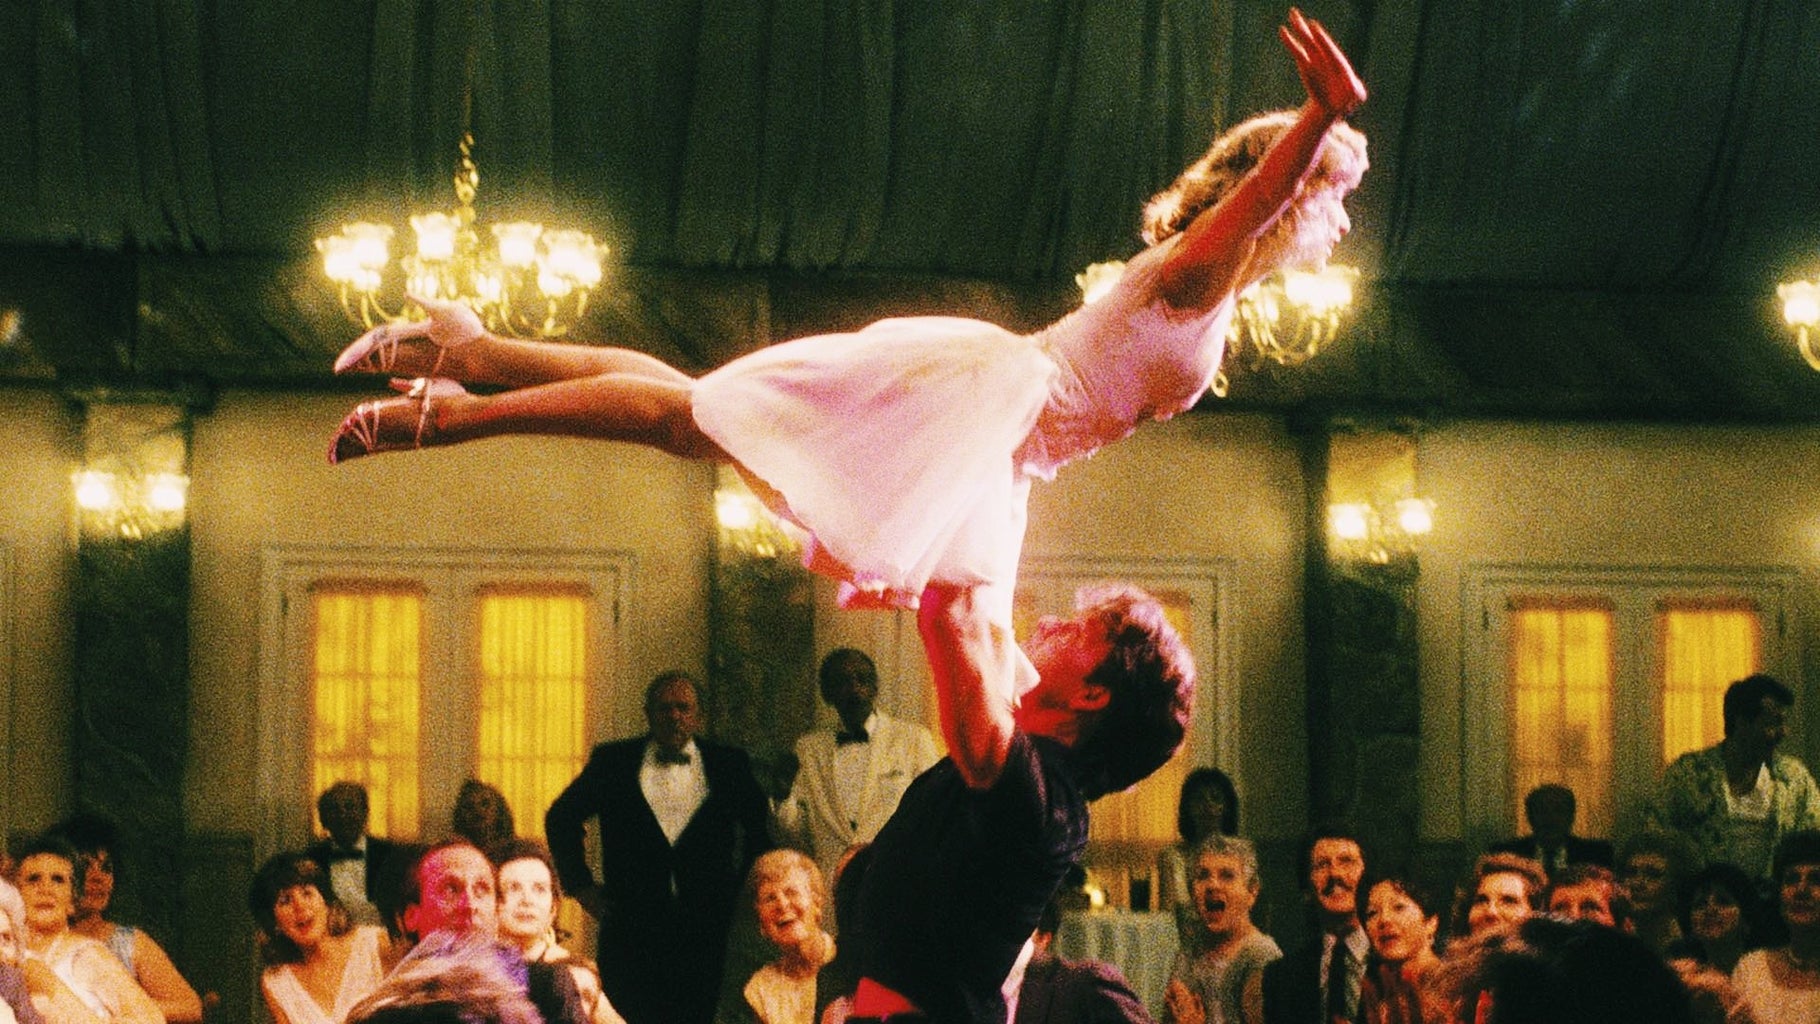 Patrick Swayze lifting up Jennifer Grey up in Dirty Dancing